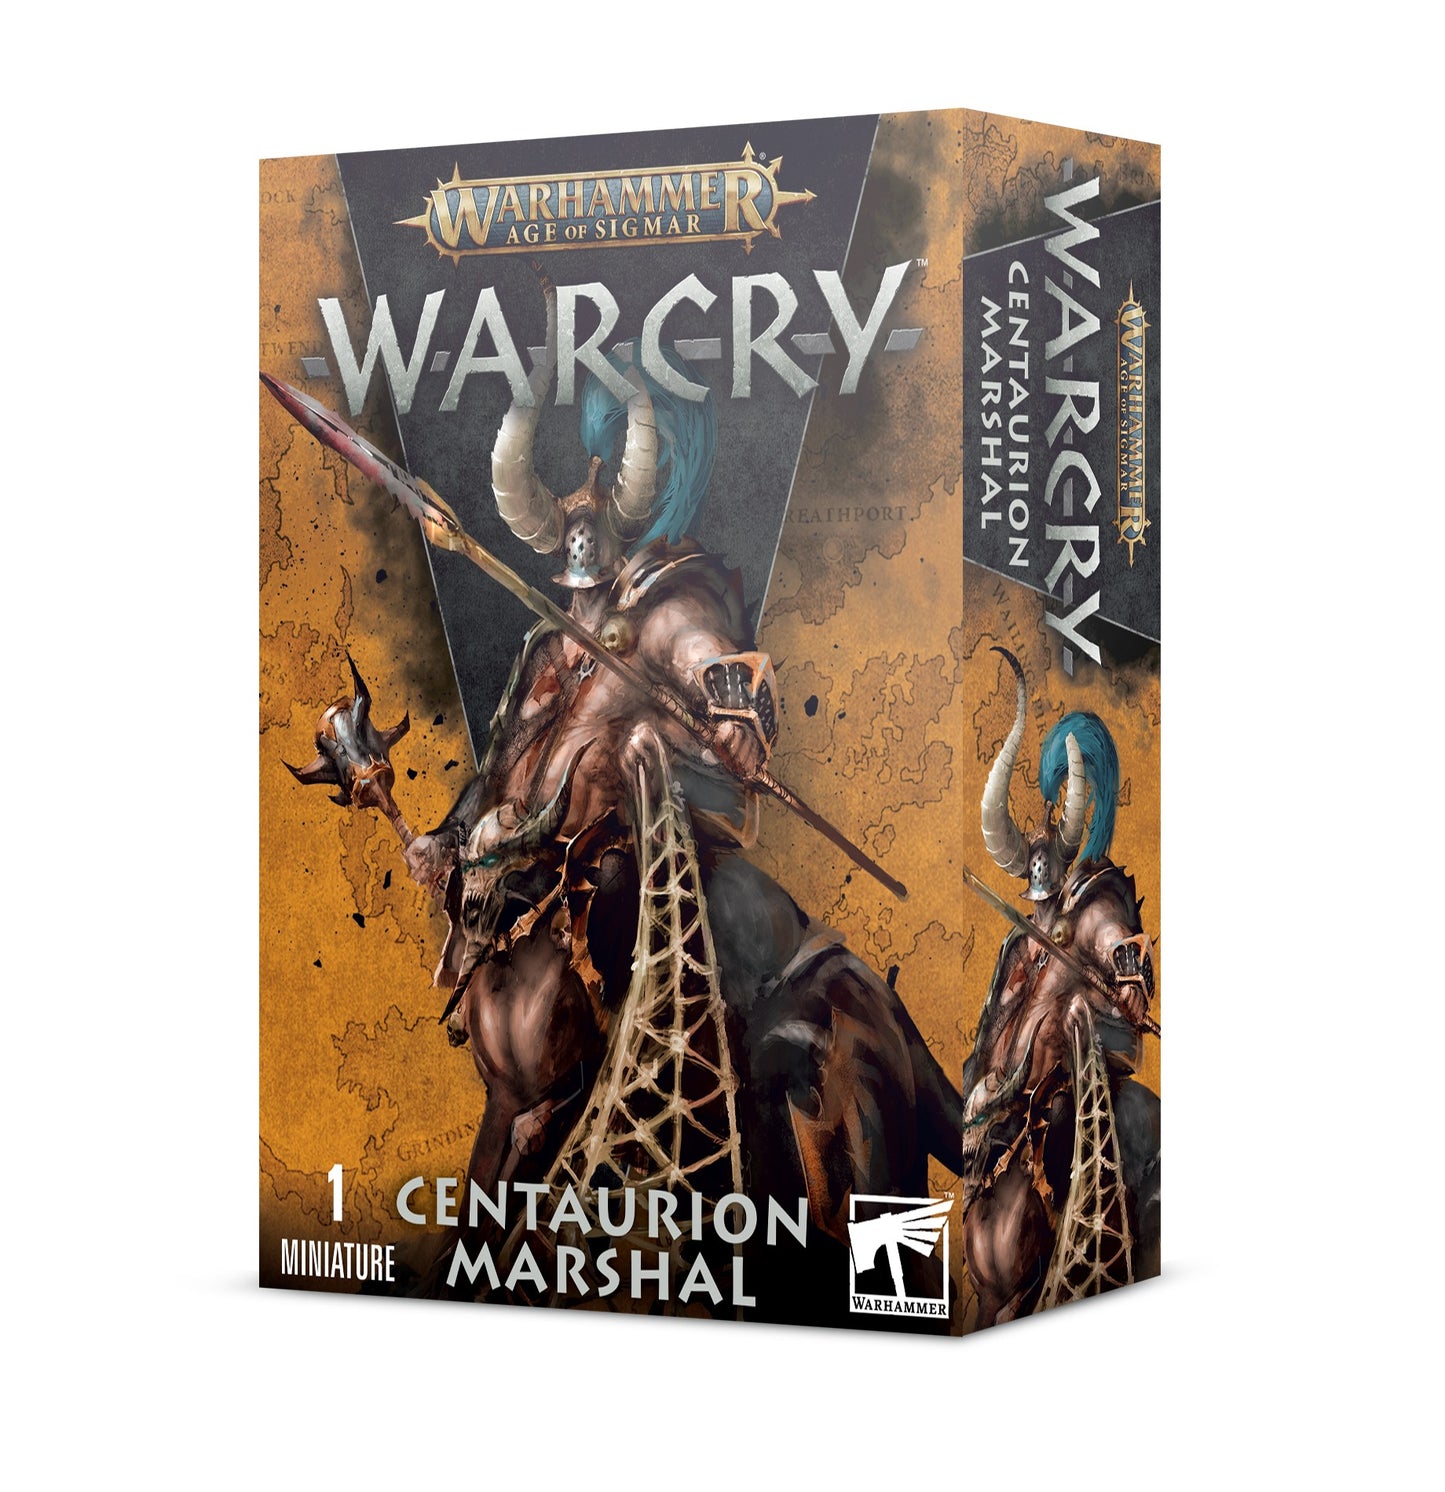 Warcry Centurion Marshal